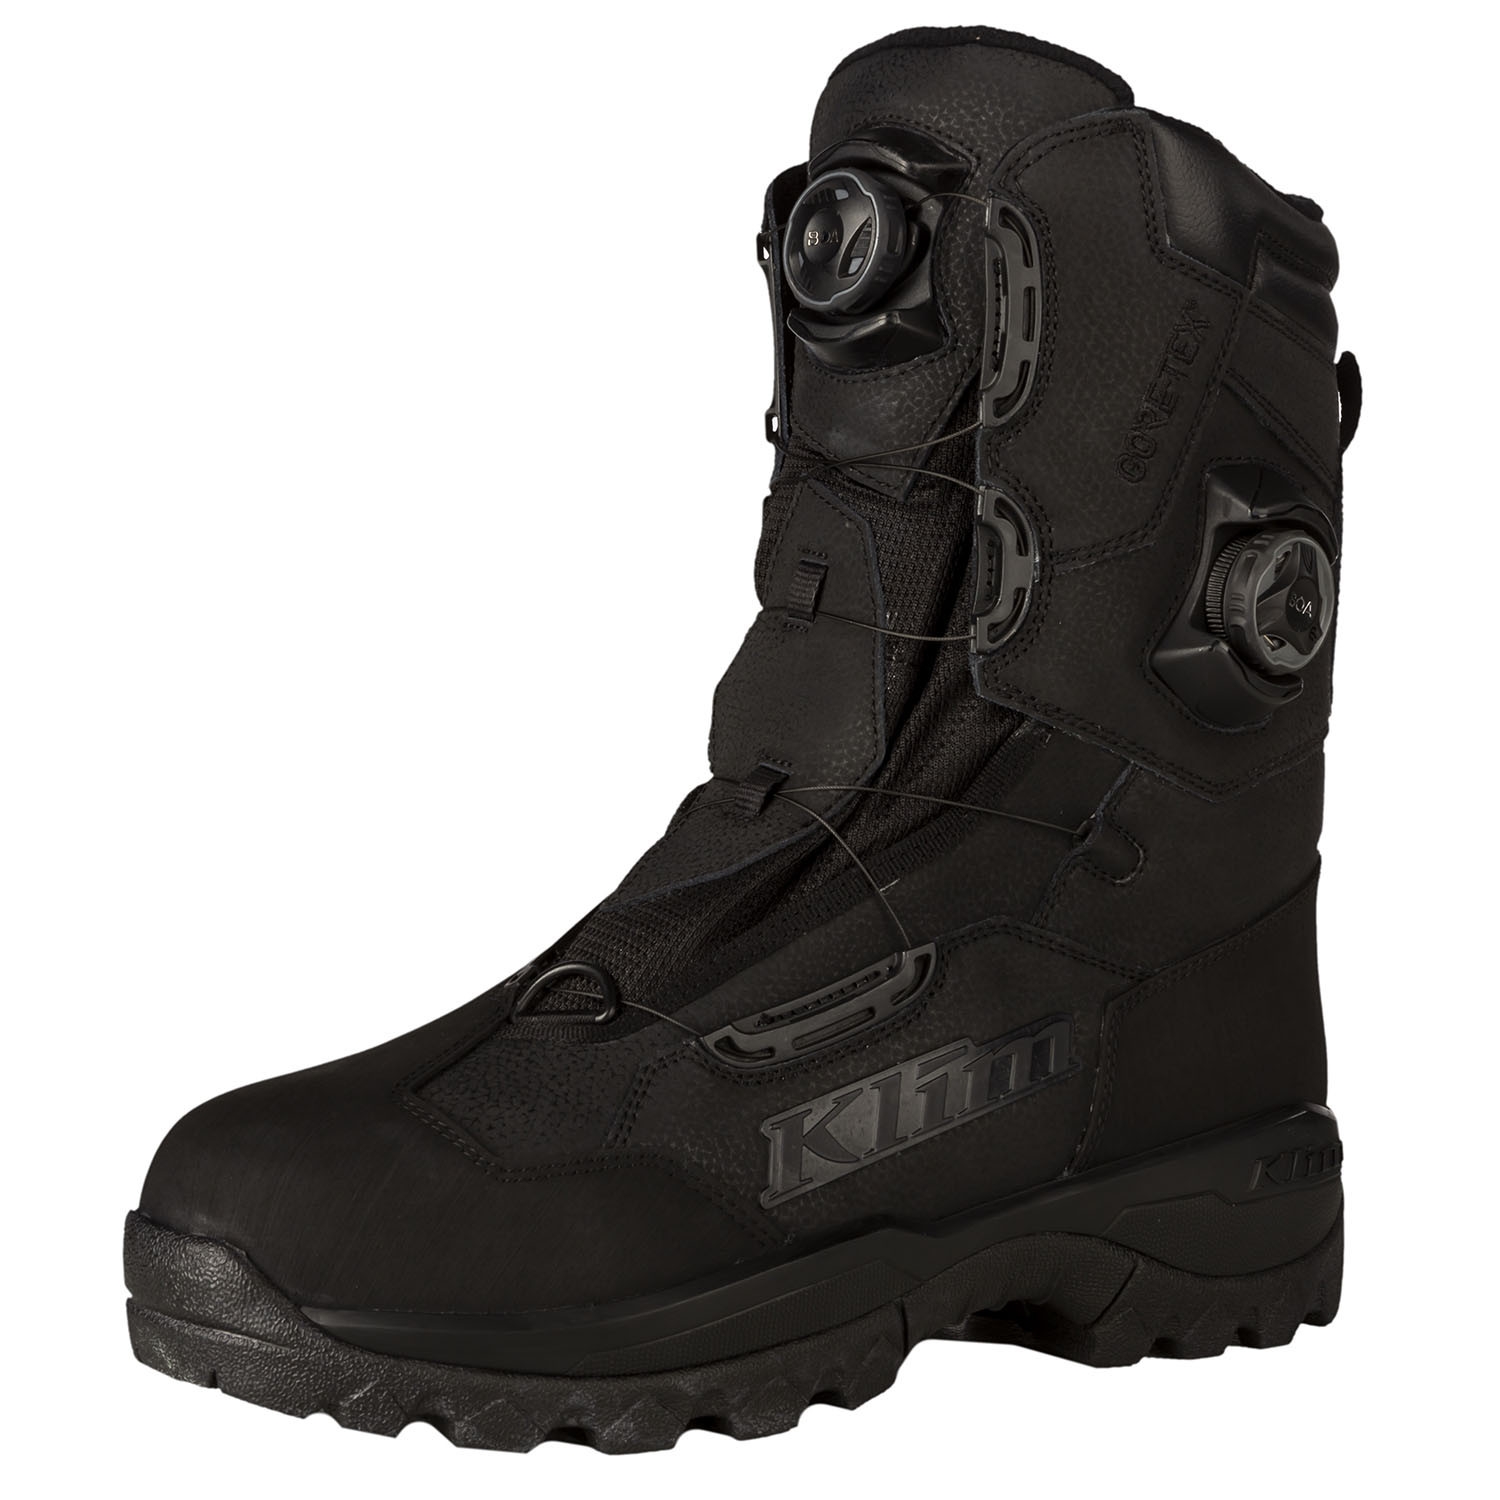 Ботинки / Adrenaline Pro GTX BOA Boot 10 Black Klim